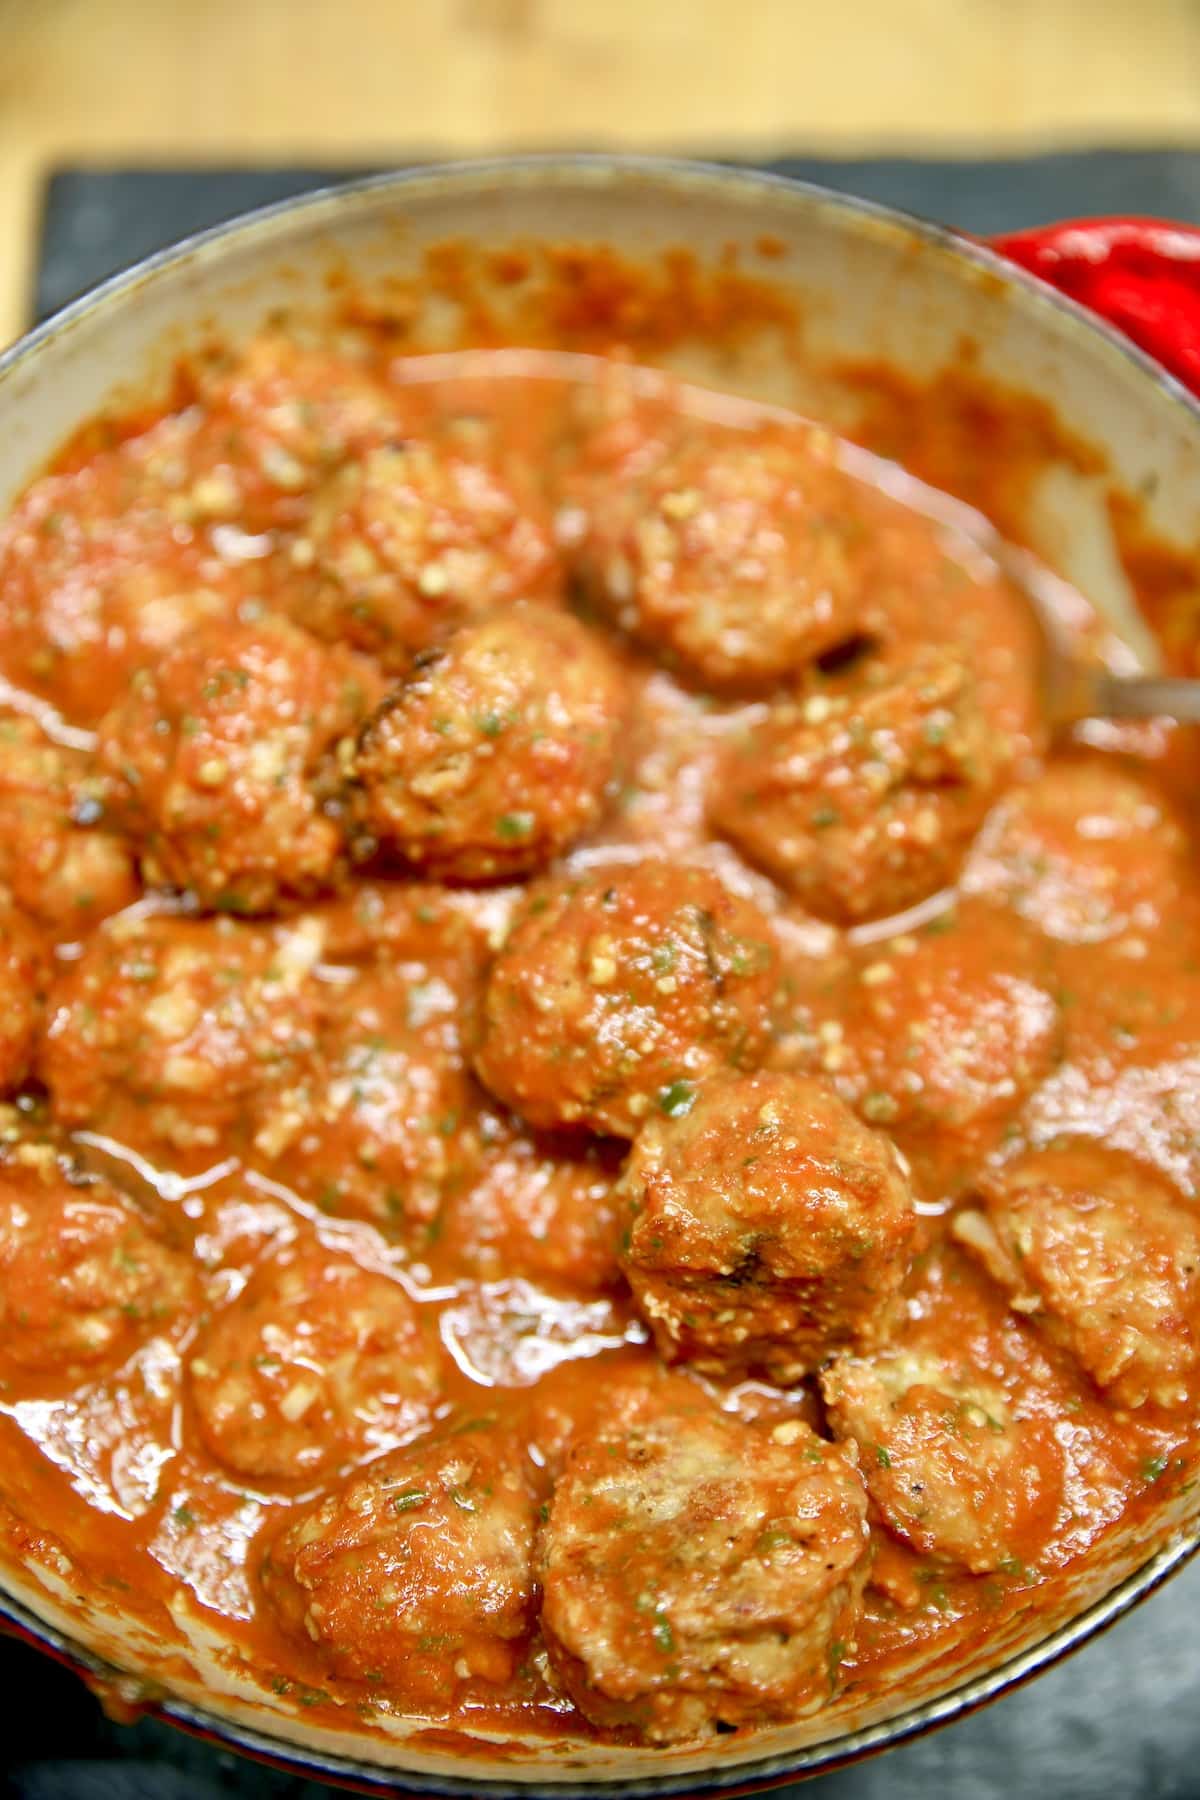 Pan of meatballs in marinara sauce.